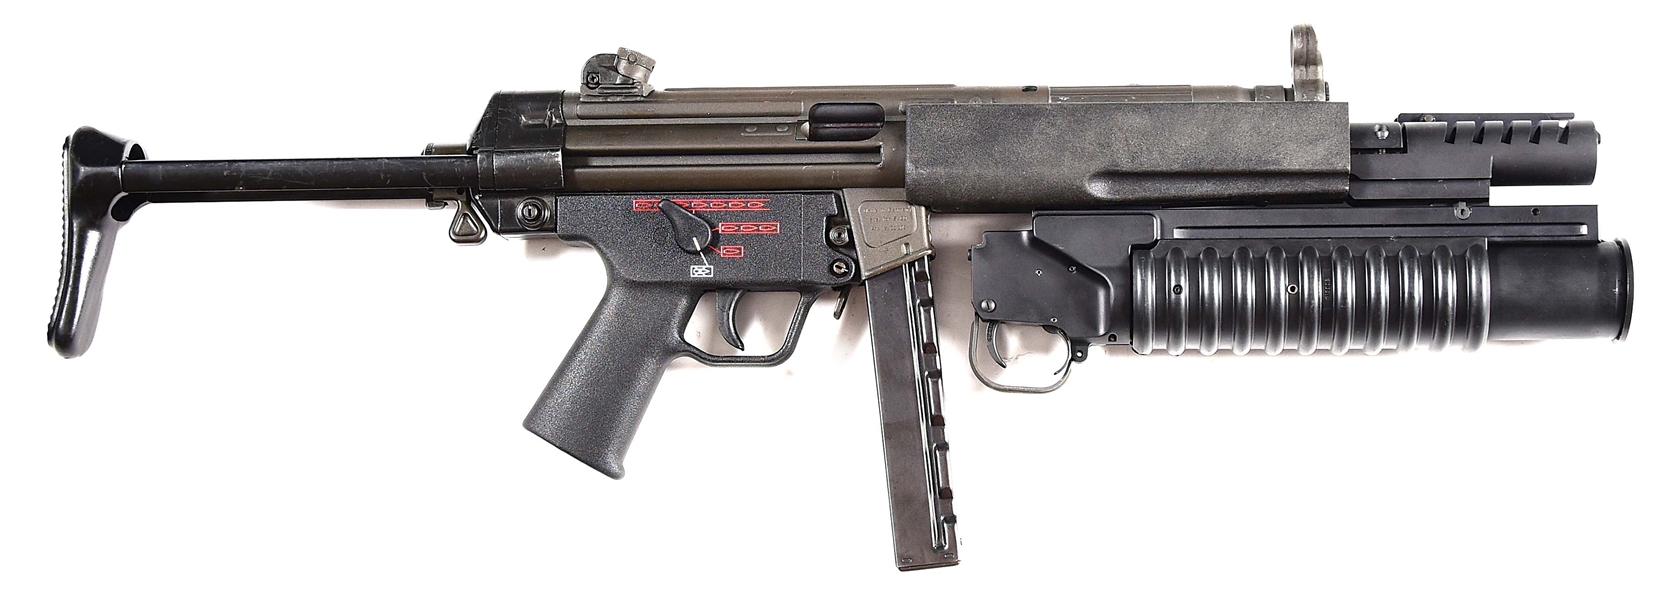 (N) ALWAYS DESIRABLE H&K MP5A3 MACHINE GUN WITH R/M EQUIPMENT M203 PI GRENADE LAUNCHER AND RM ATTACHMENT POINT (DD) (PRE-86 DEALER SAMPLE).